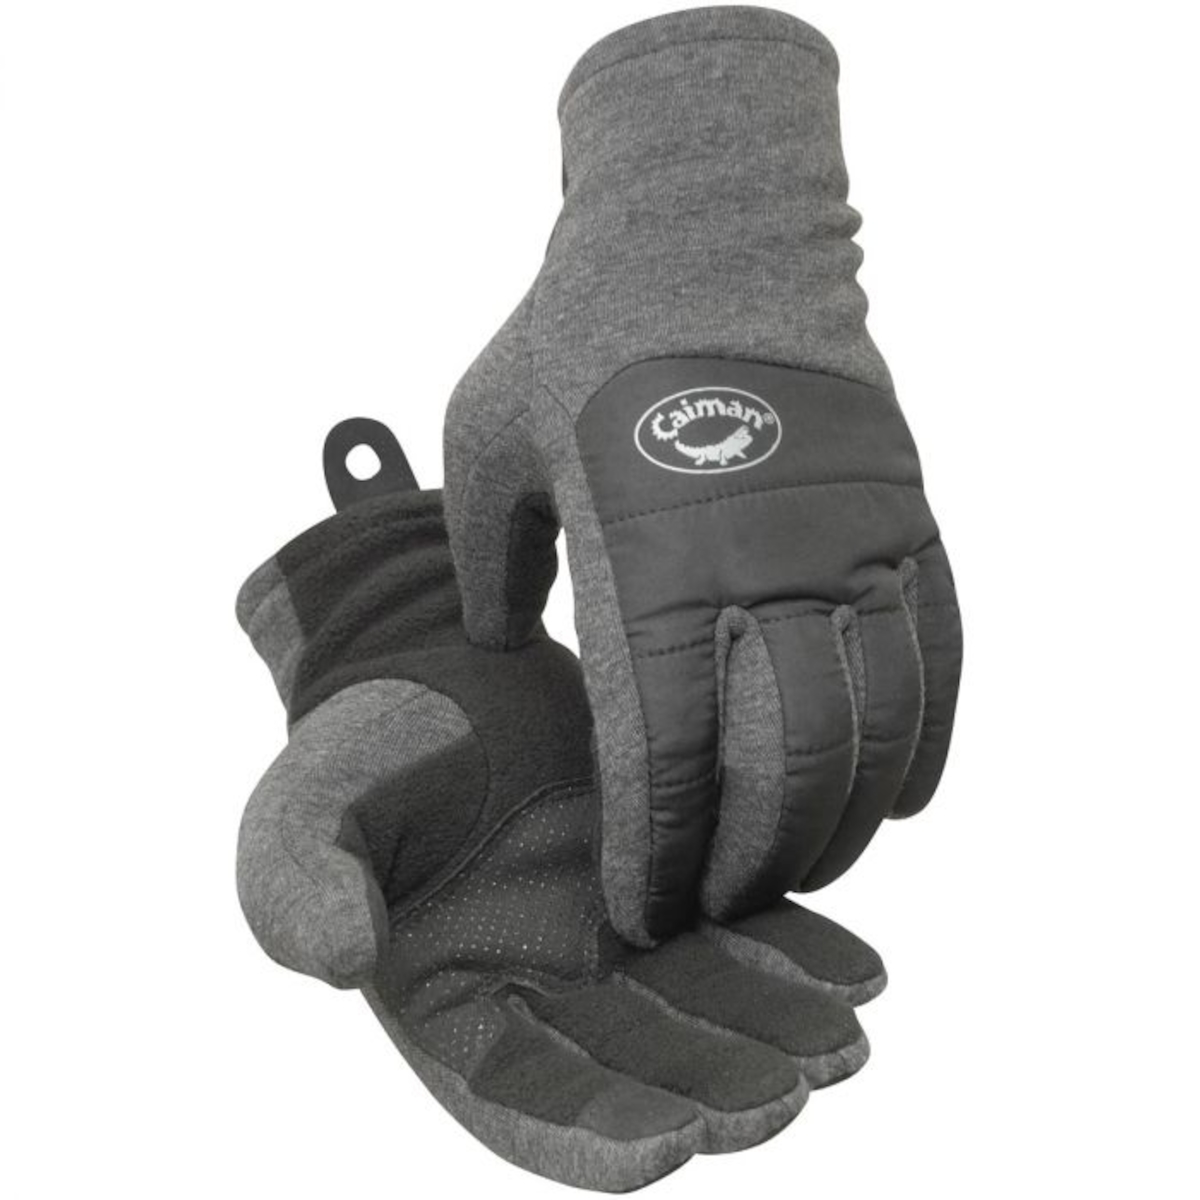 2384 PIP® Caiman® Fleece Touchscreen Gloves w/ Micro-Dot Palm & Thermal Lining